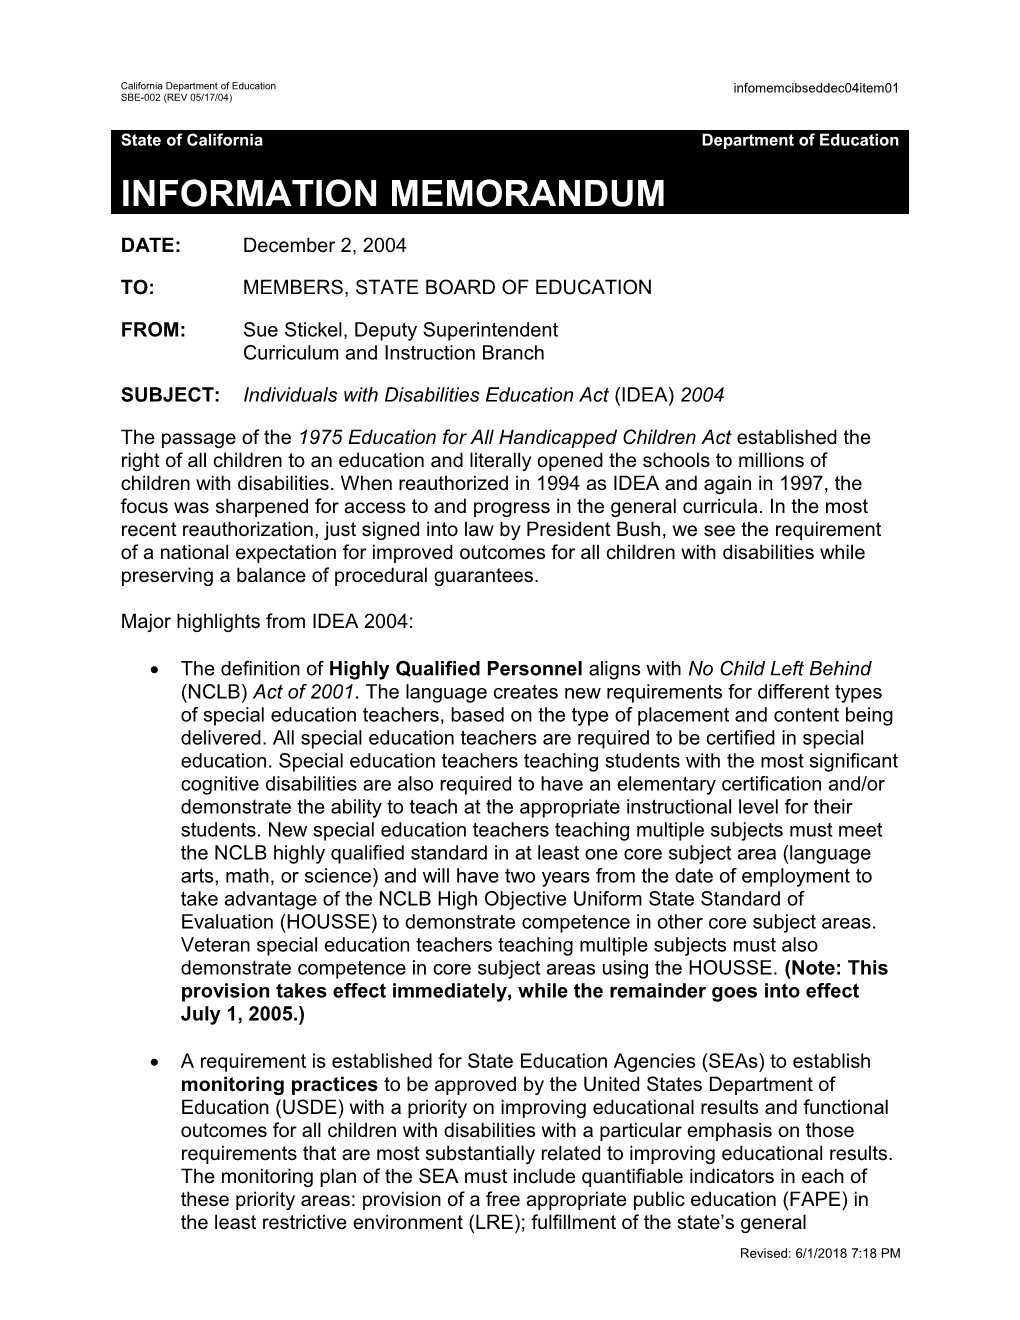 December 2004 SED Item 1 - Information Memorandum (CA State Board of Education)